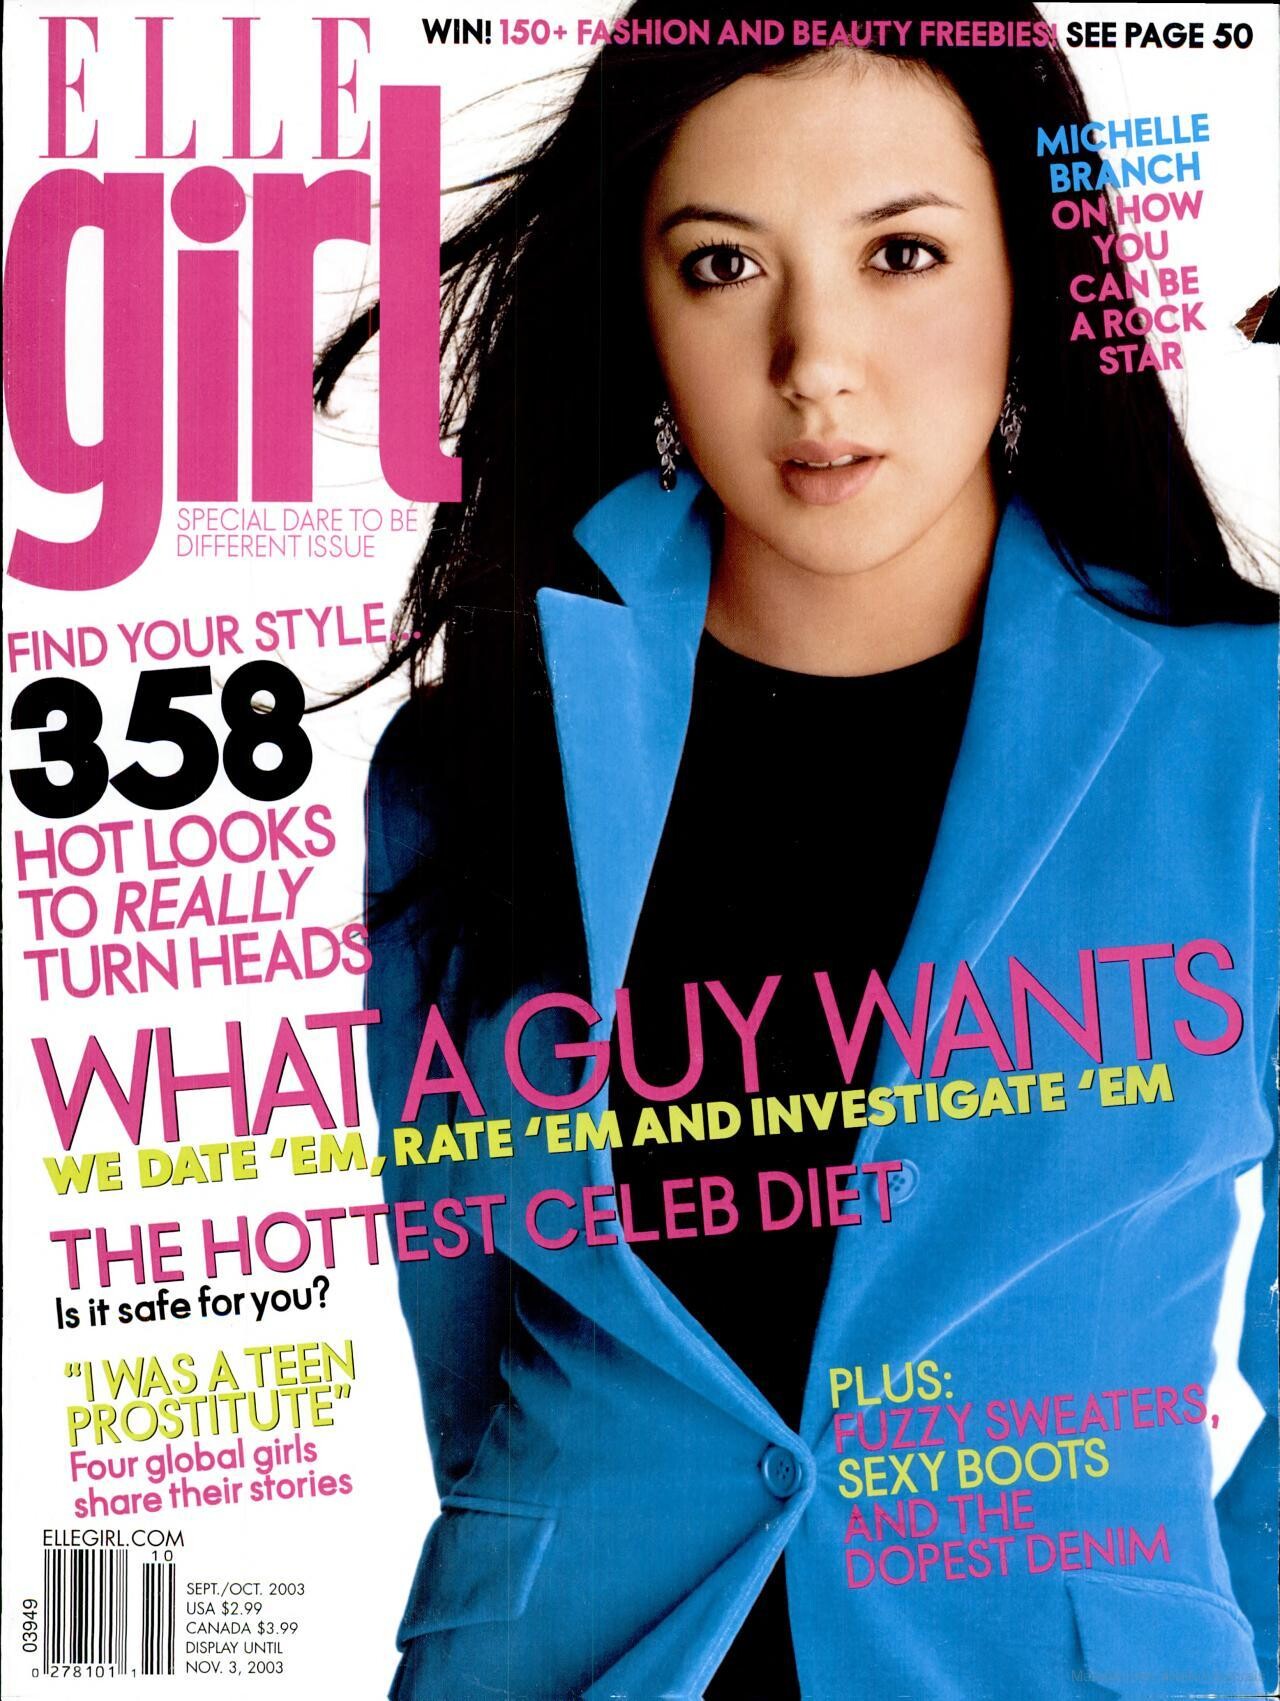 Us magazine. Elle журнал 2003. The girl журнал. Эль герл. Elle girl стиль.